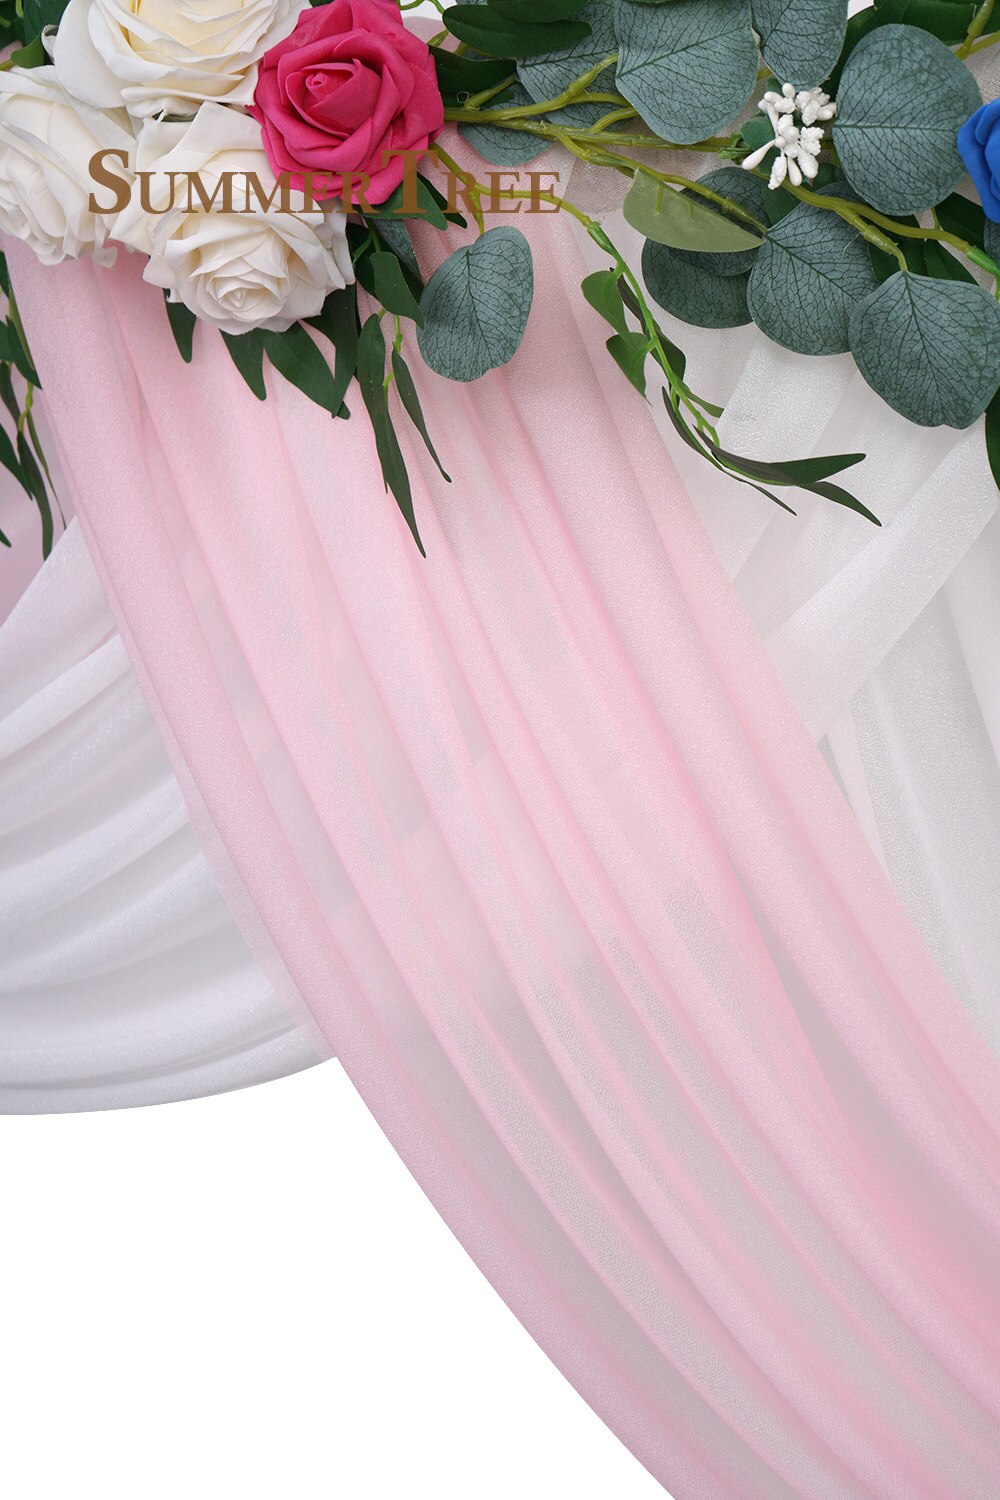 10 Meters Wedding Arch Drape Fabric Sheer